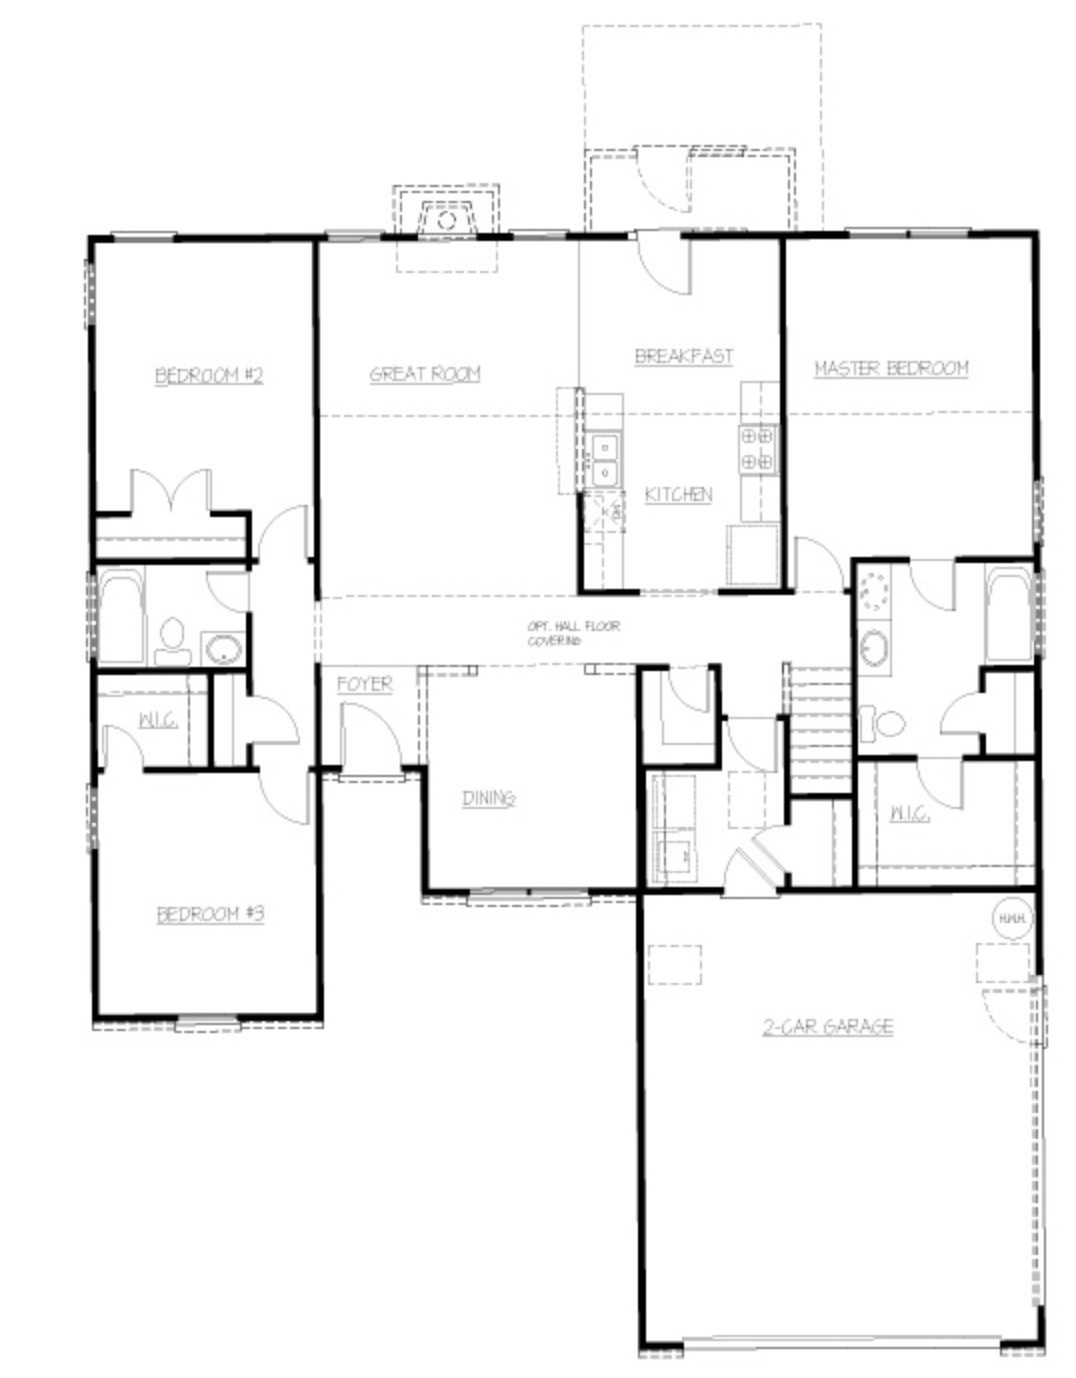 The Midland floor plan image